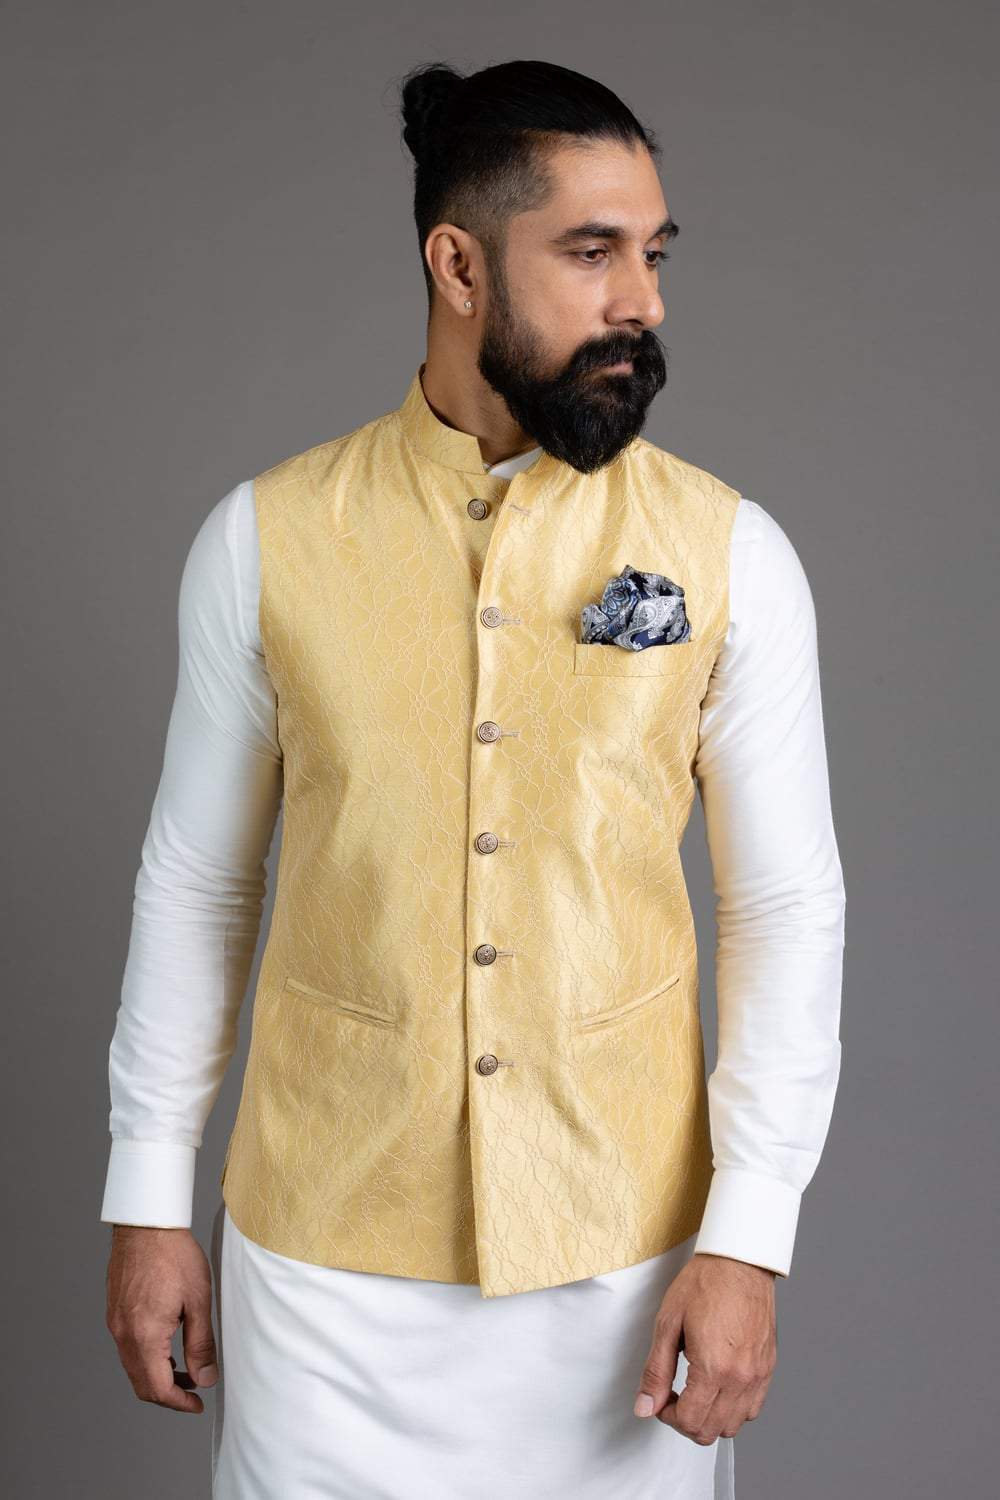 Nehru Jacket for Men - Buy Best Nehru Jackets for Men Online